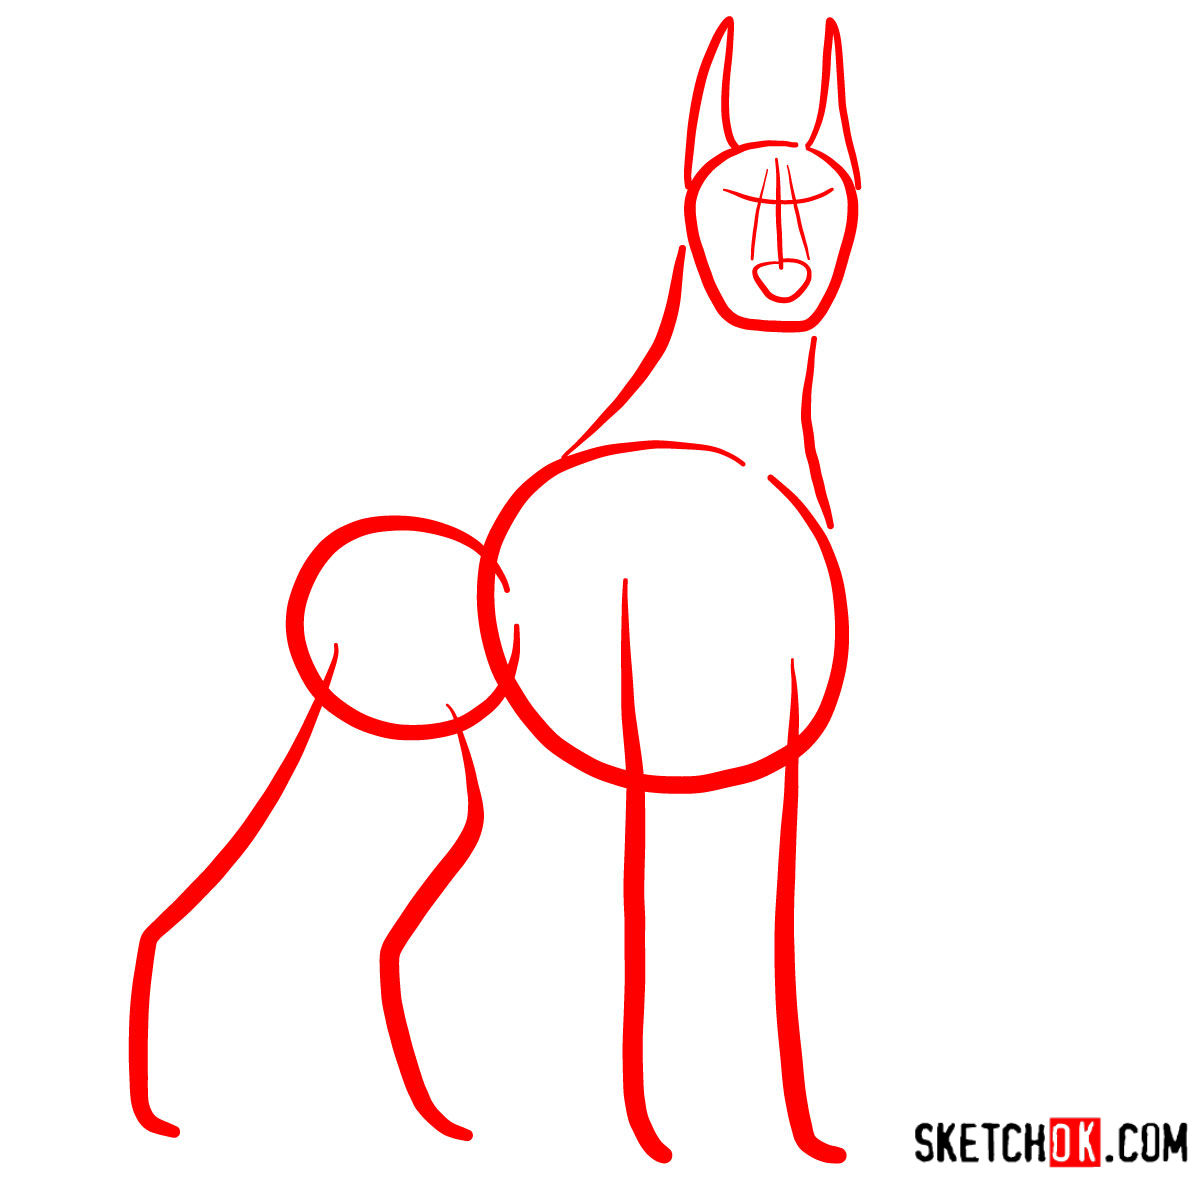 How to draw the Dobermann dog - step 01